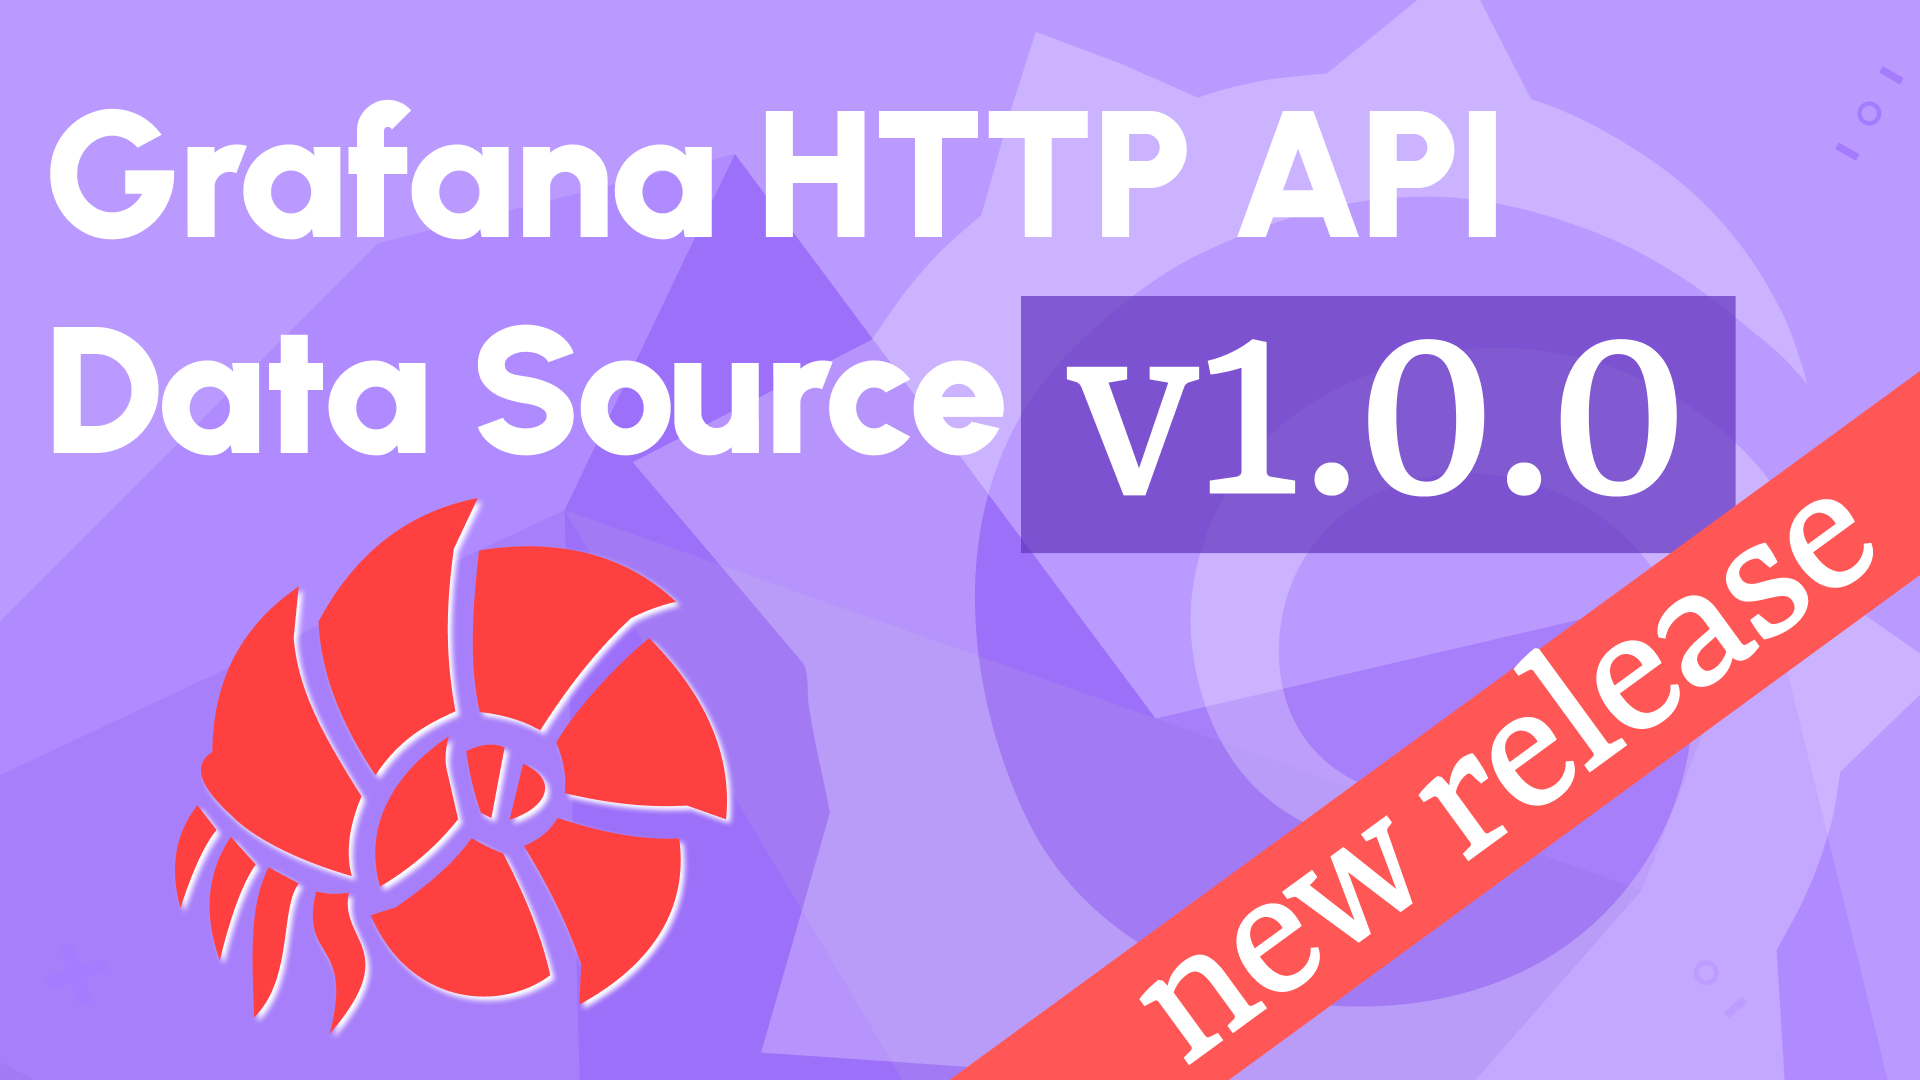 Grafana HTTP API Data Source 1.0.0